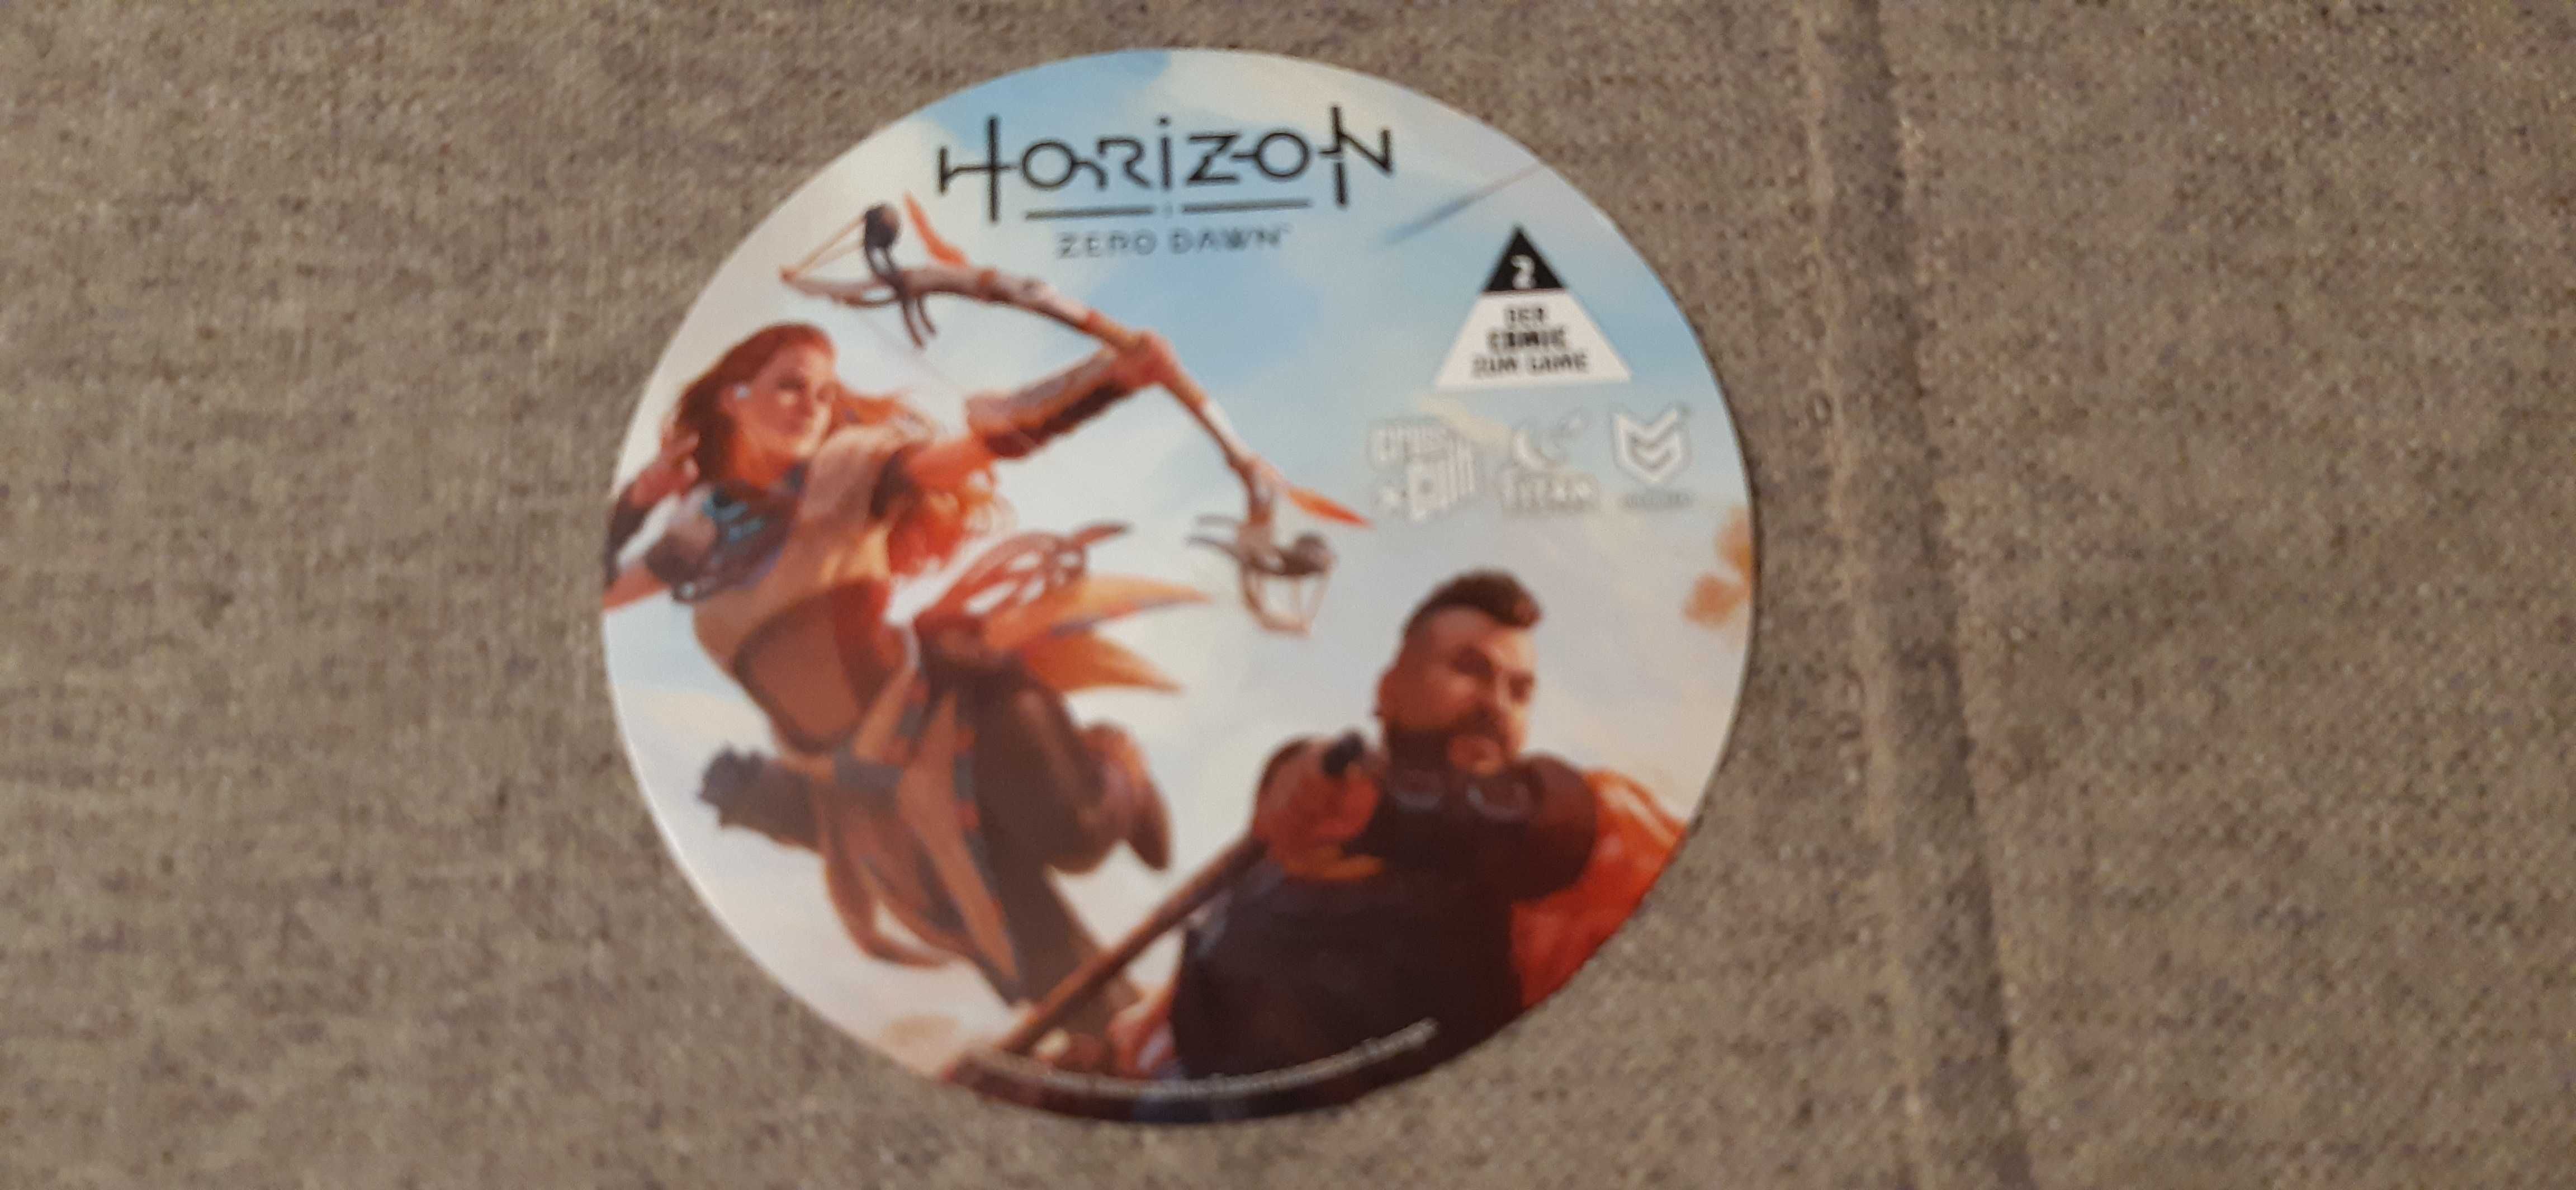 naklejka kolekcjonerska z gry Horizon playstation